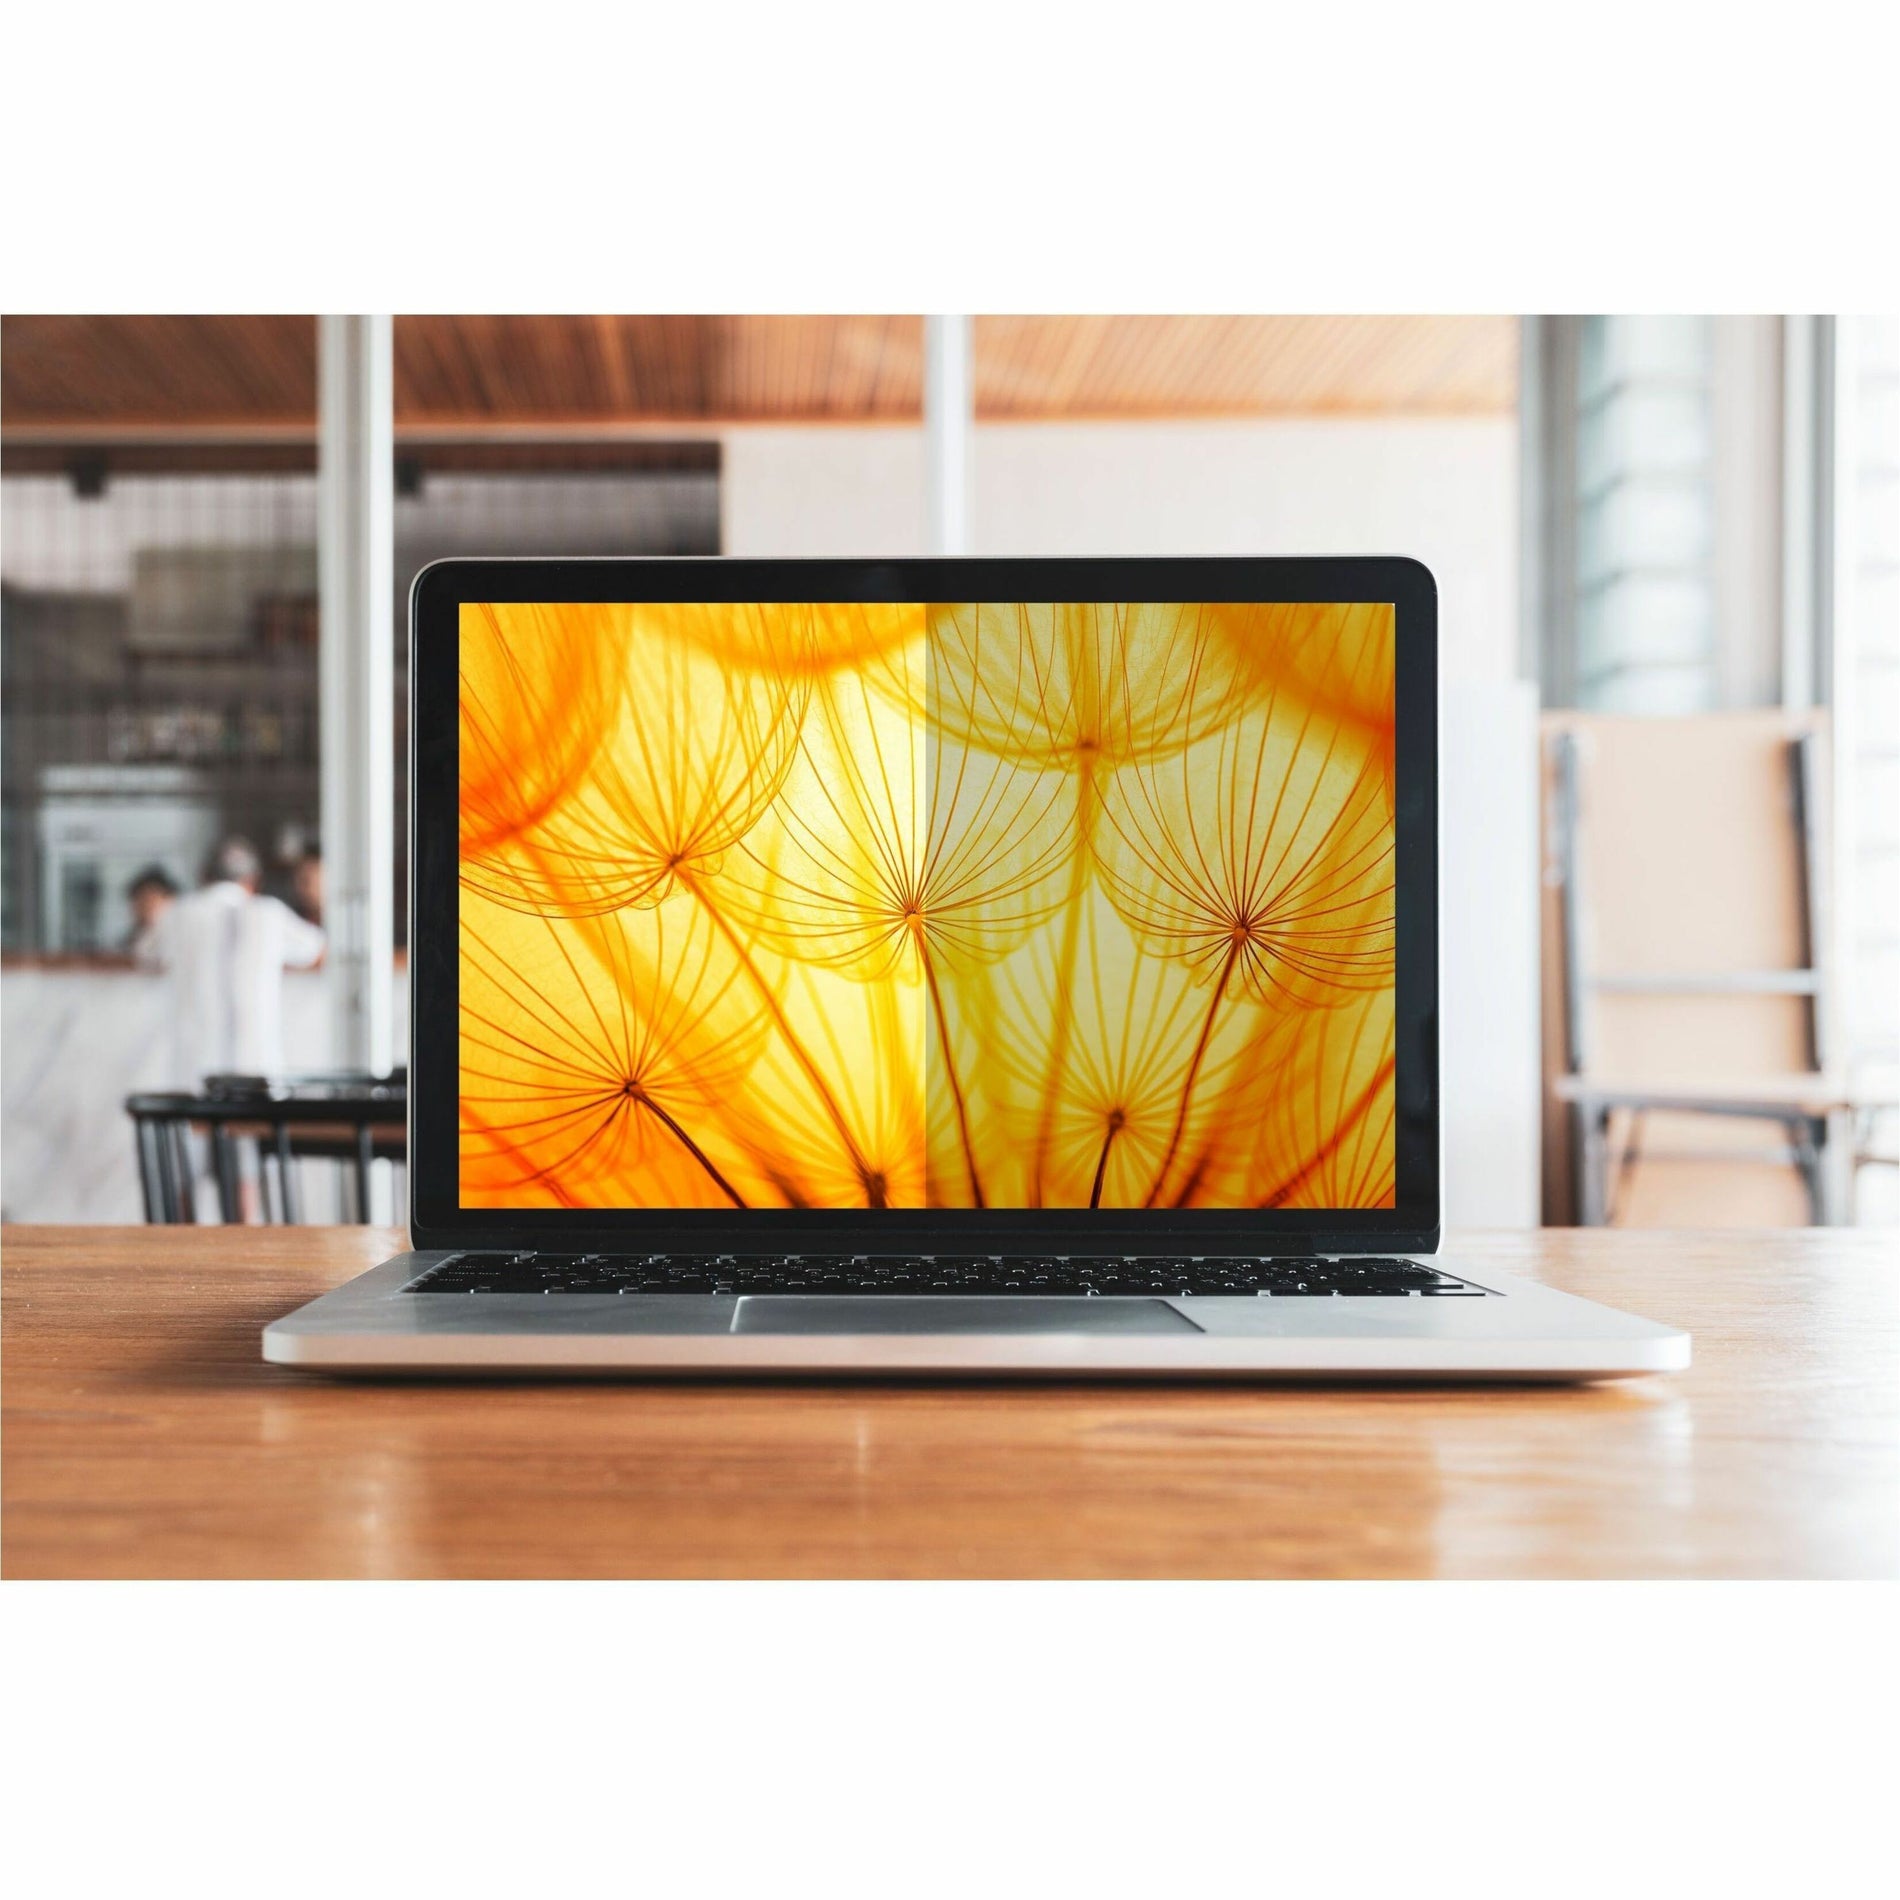 3M BP135C3E Bright Screen Privacy Filter for 13.5in Full Screen Laptop, 3:2, Ultra Slim, Easy to Apply, Matte Black